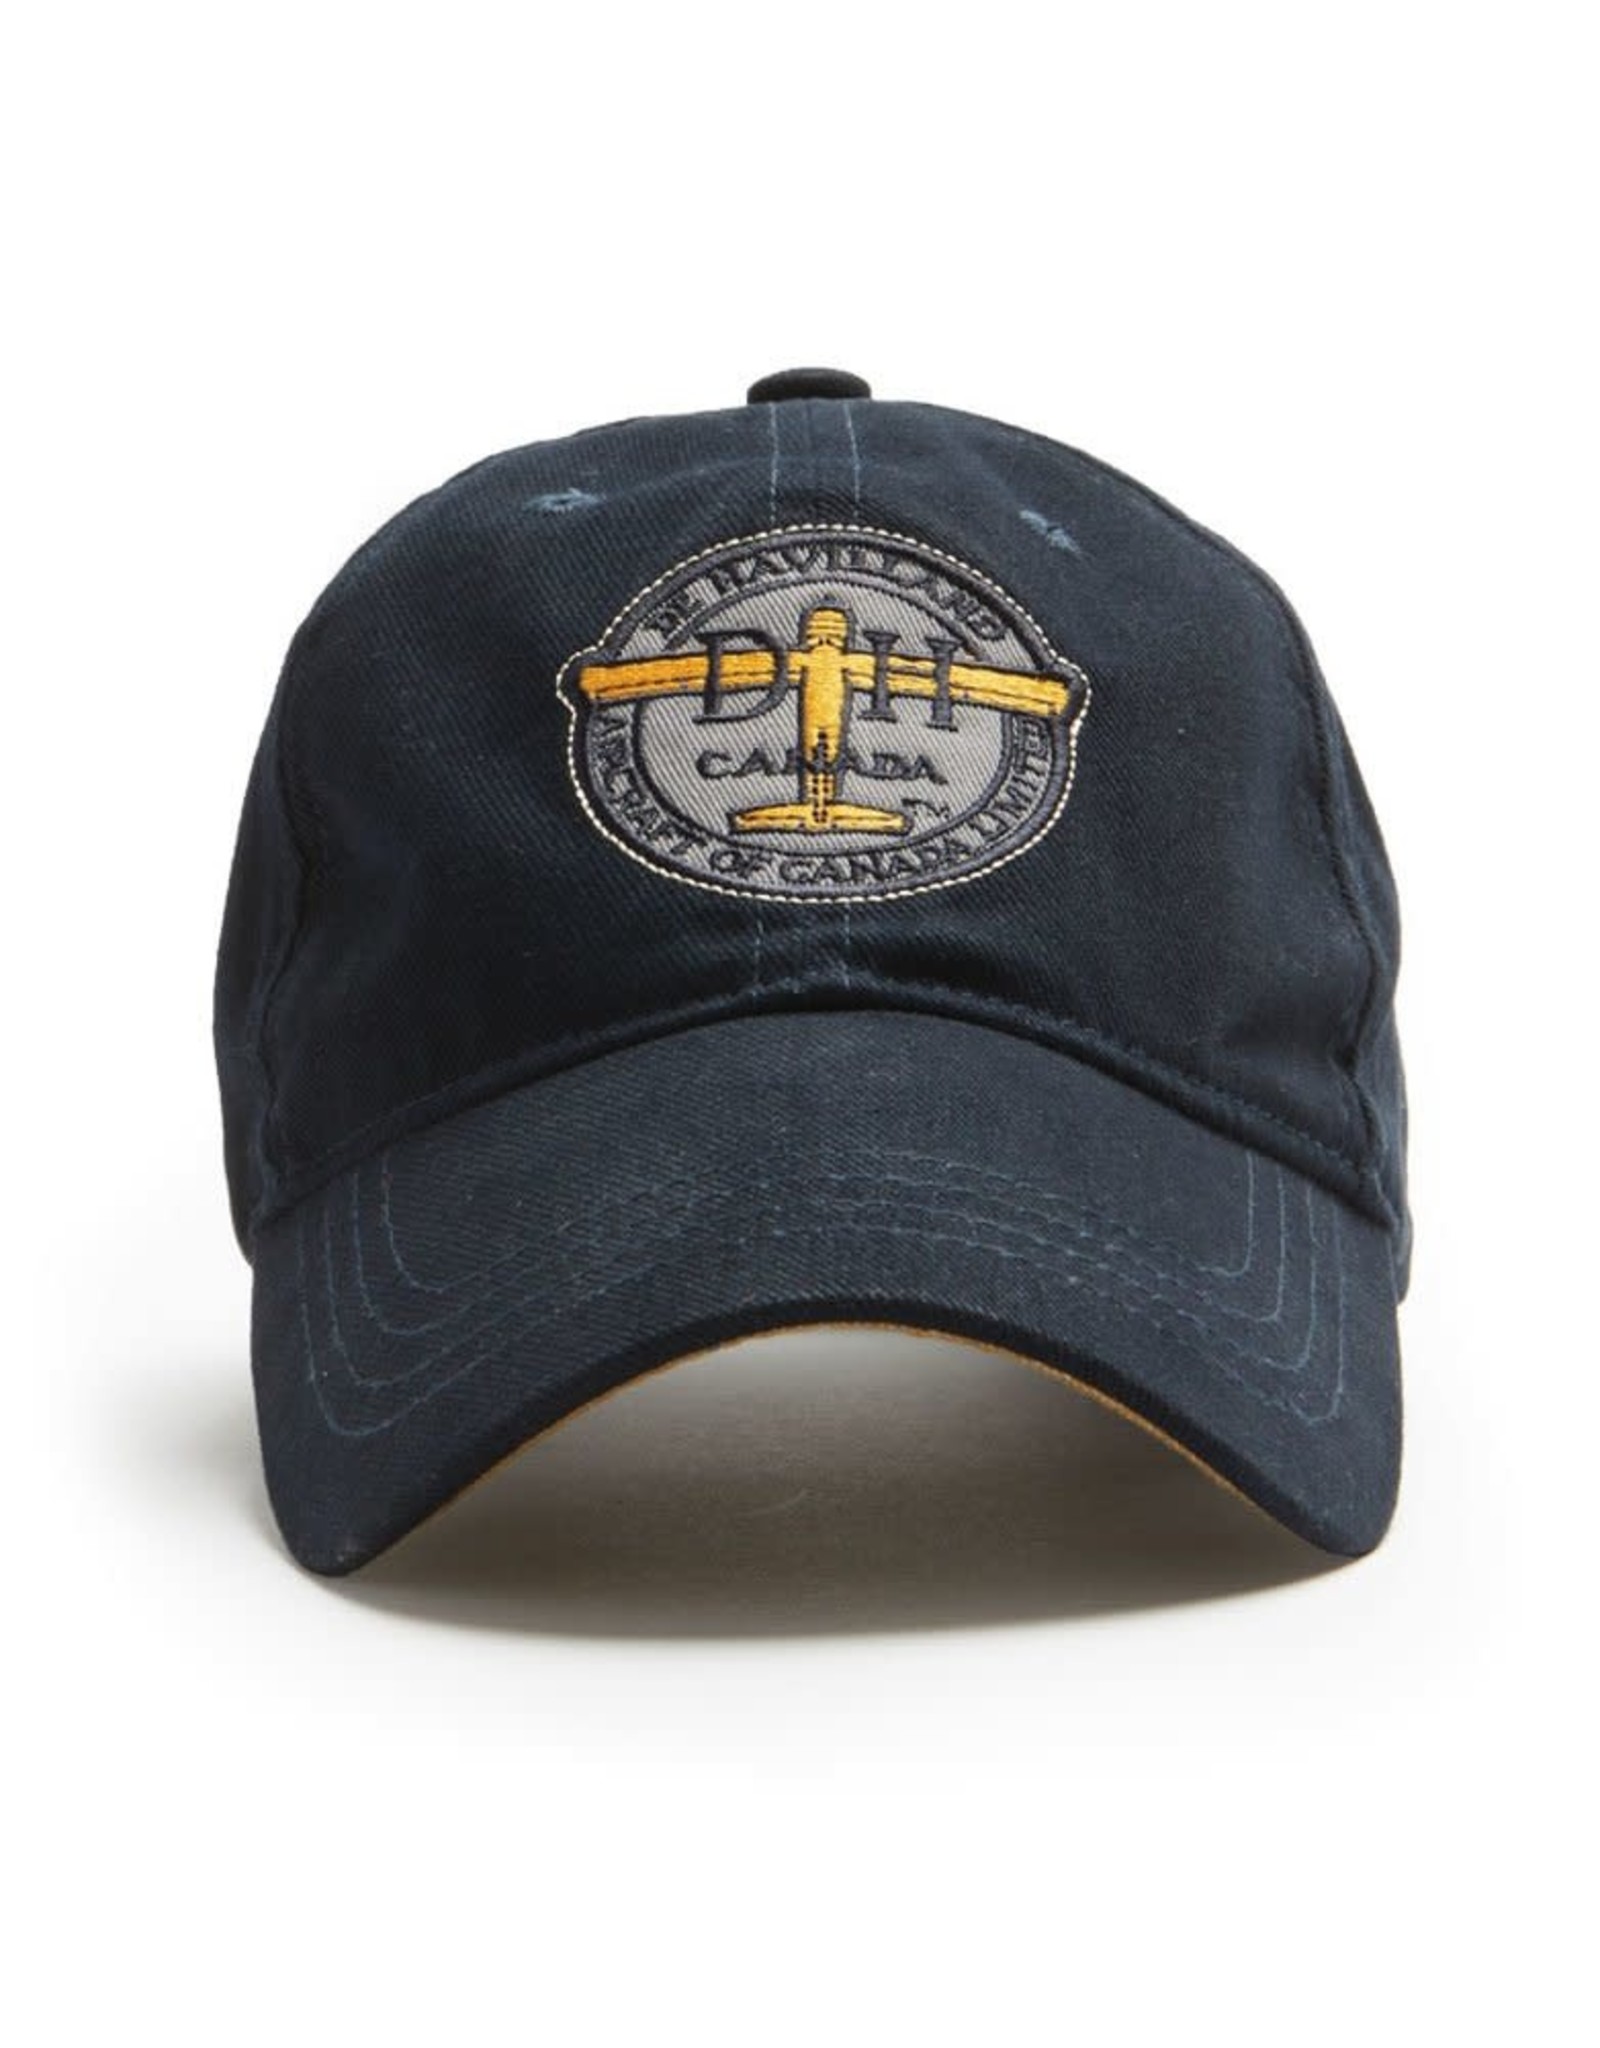 De Havilland navy hat